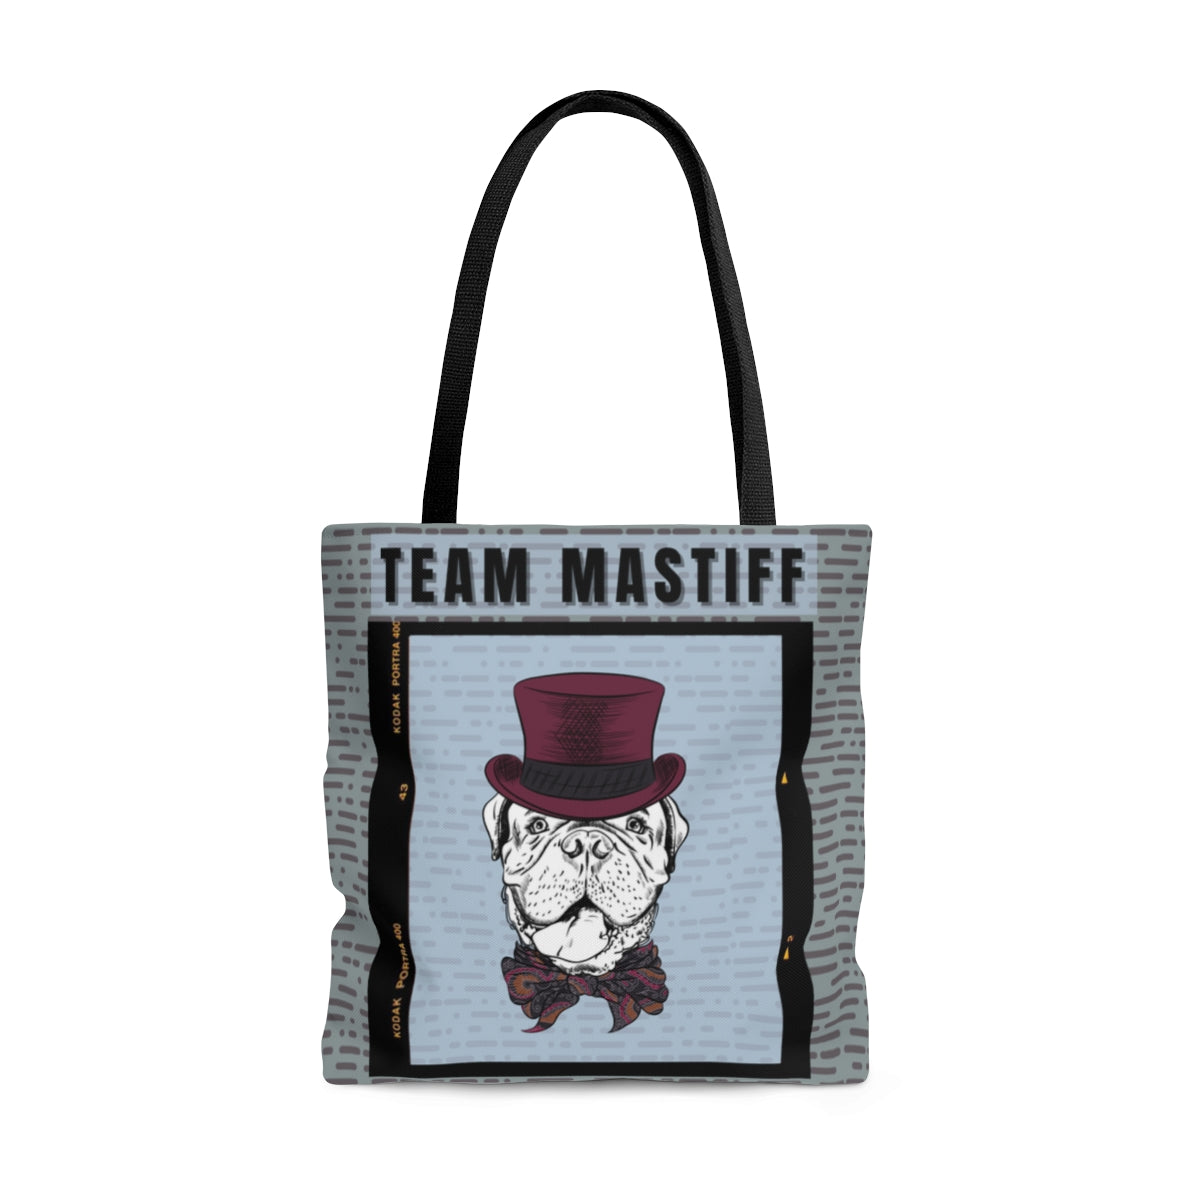 Mastiff Tote Bag, 3 sizes, Vintage, Steampunk - The Dapper Dogg